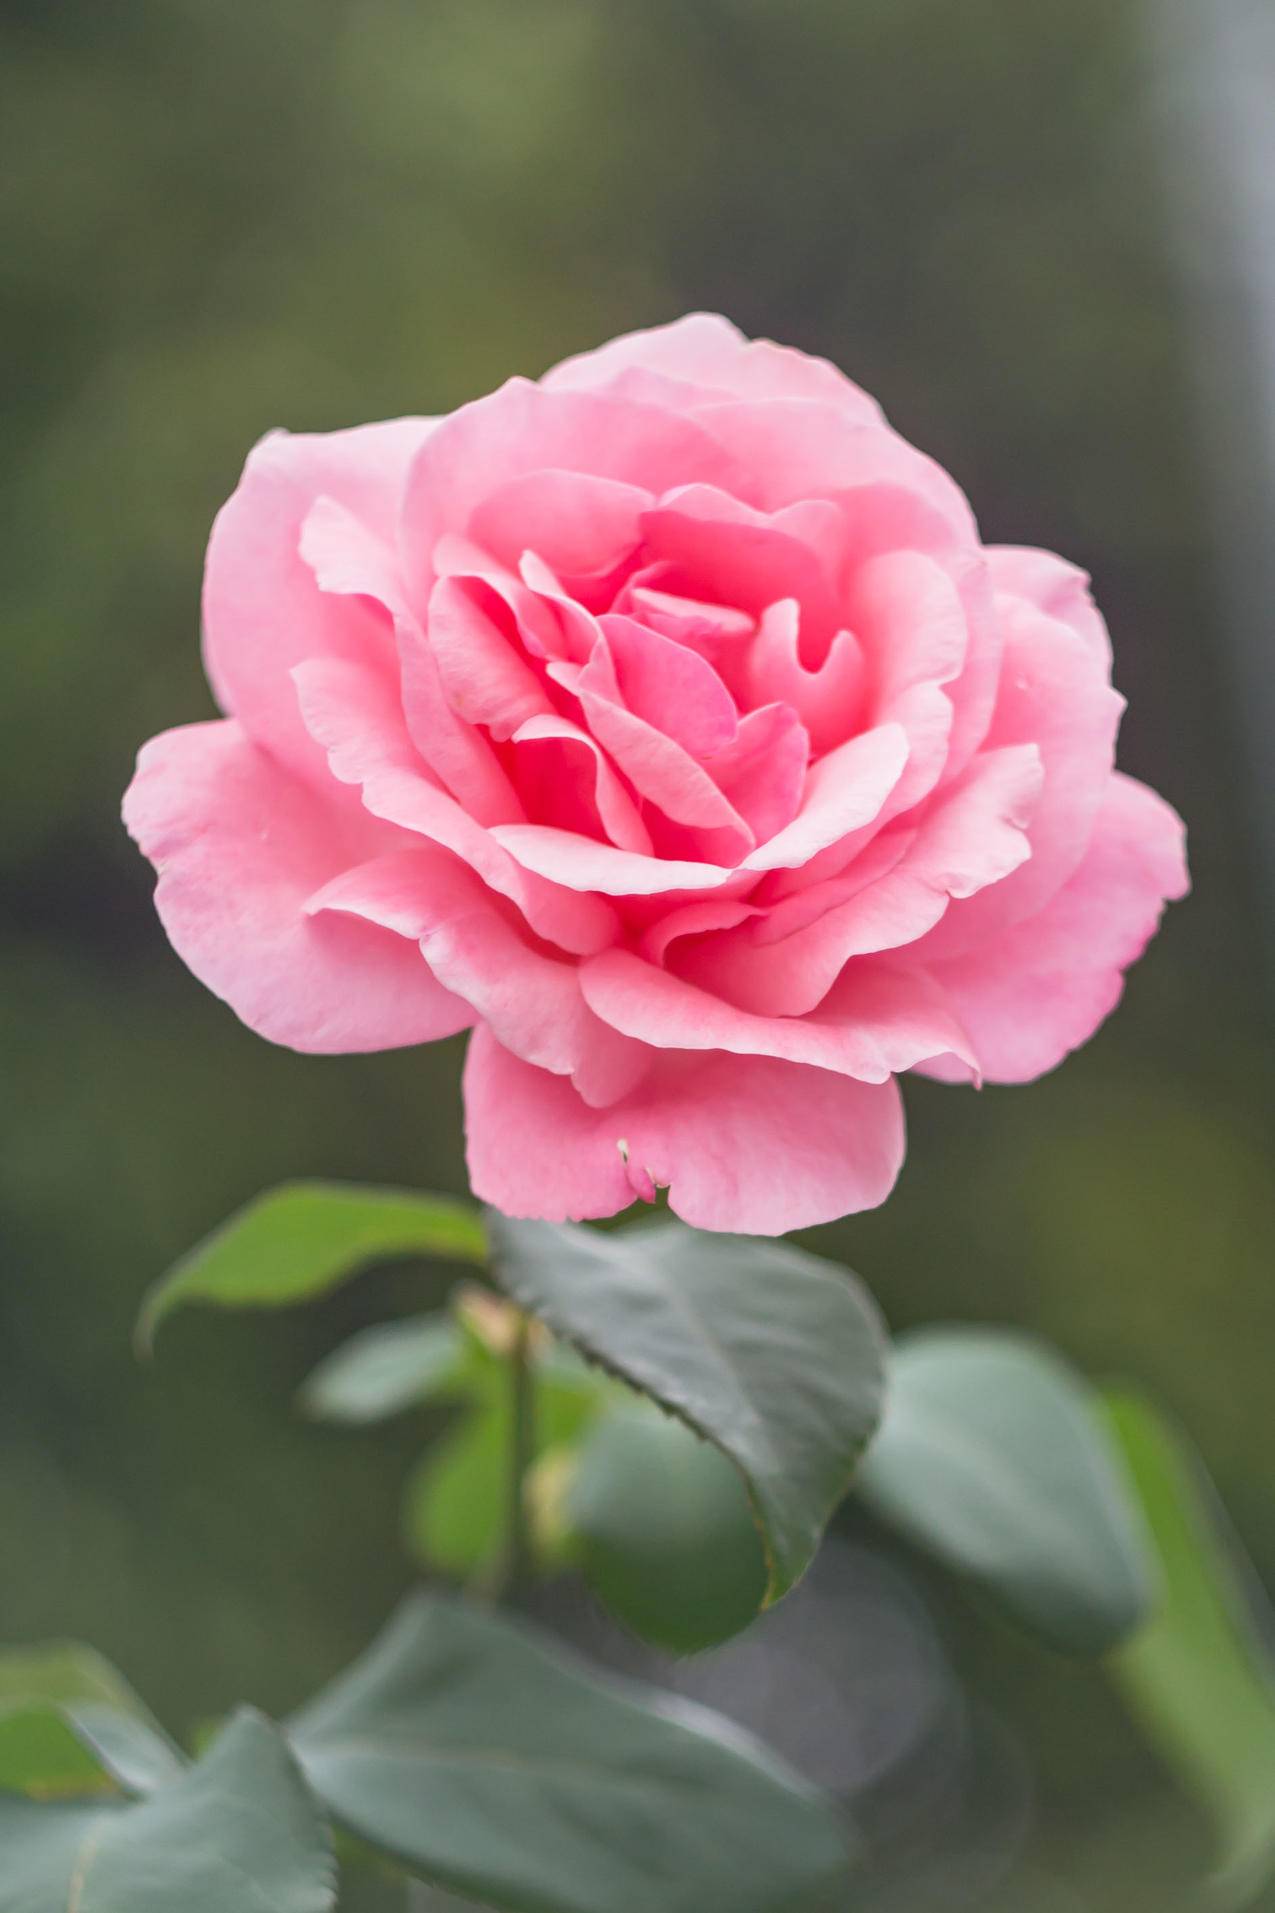 cc0可商用花园图片,花卉,粉色,罗萨